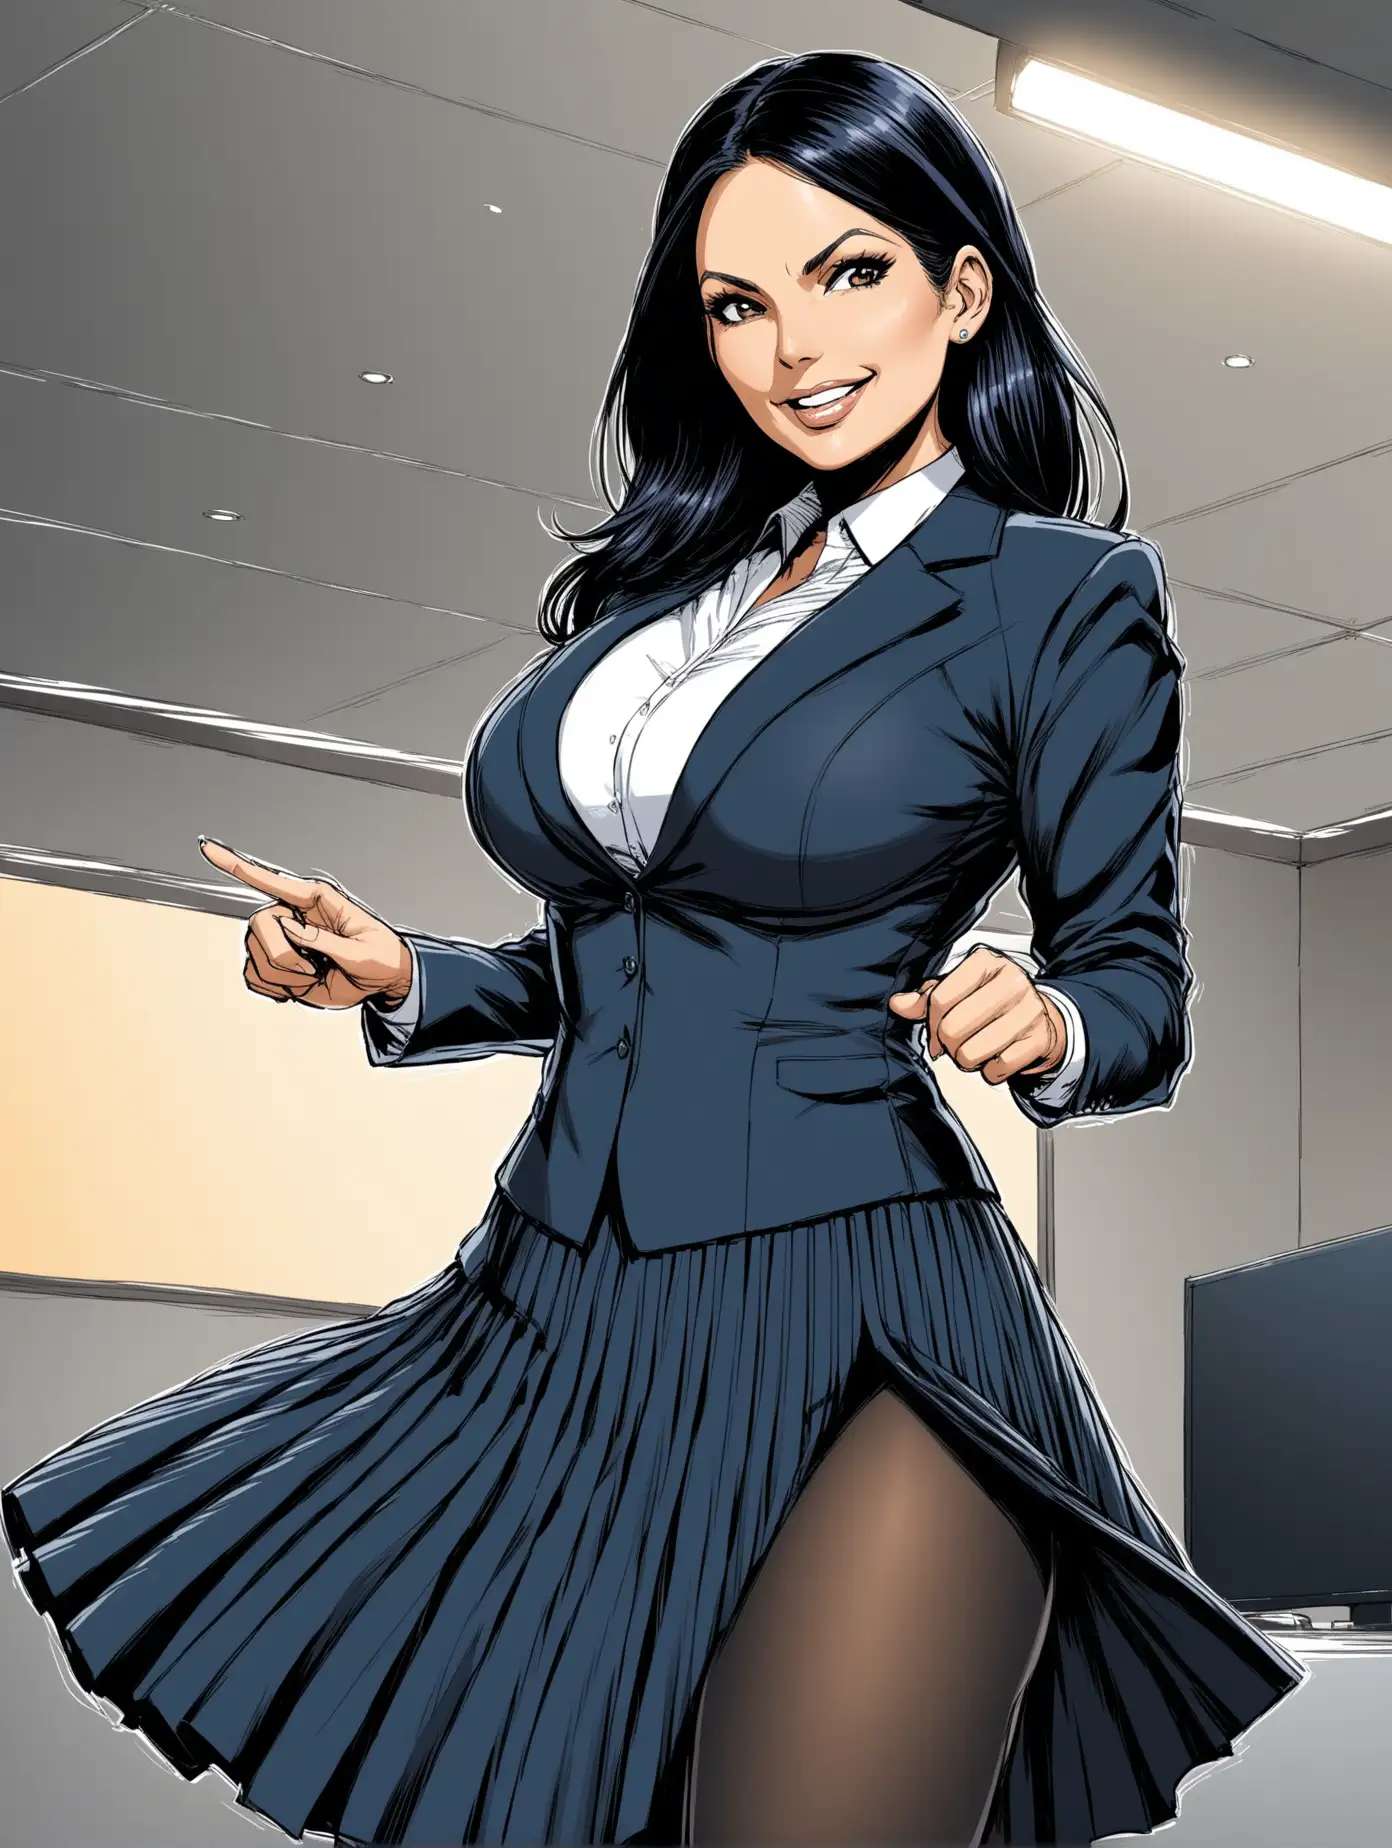 Mature, Priti Patel, dark navy suit [Highly Detailed] DC comic art style, navy pantyhose, giving speech, black bra exposed,  pulling up long pleated skirt, smirk